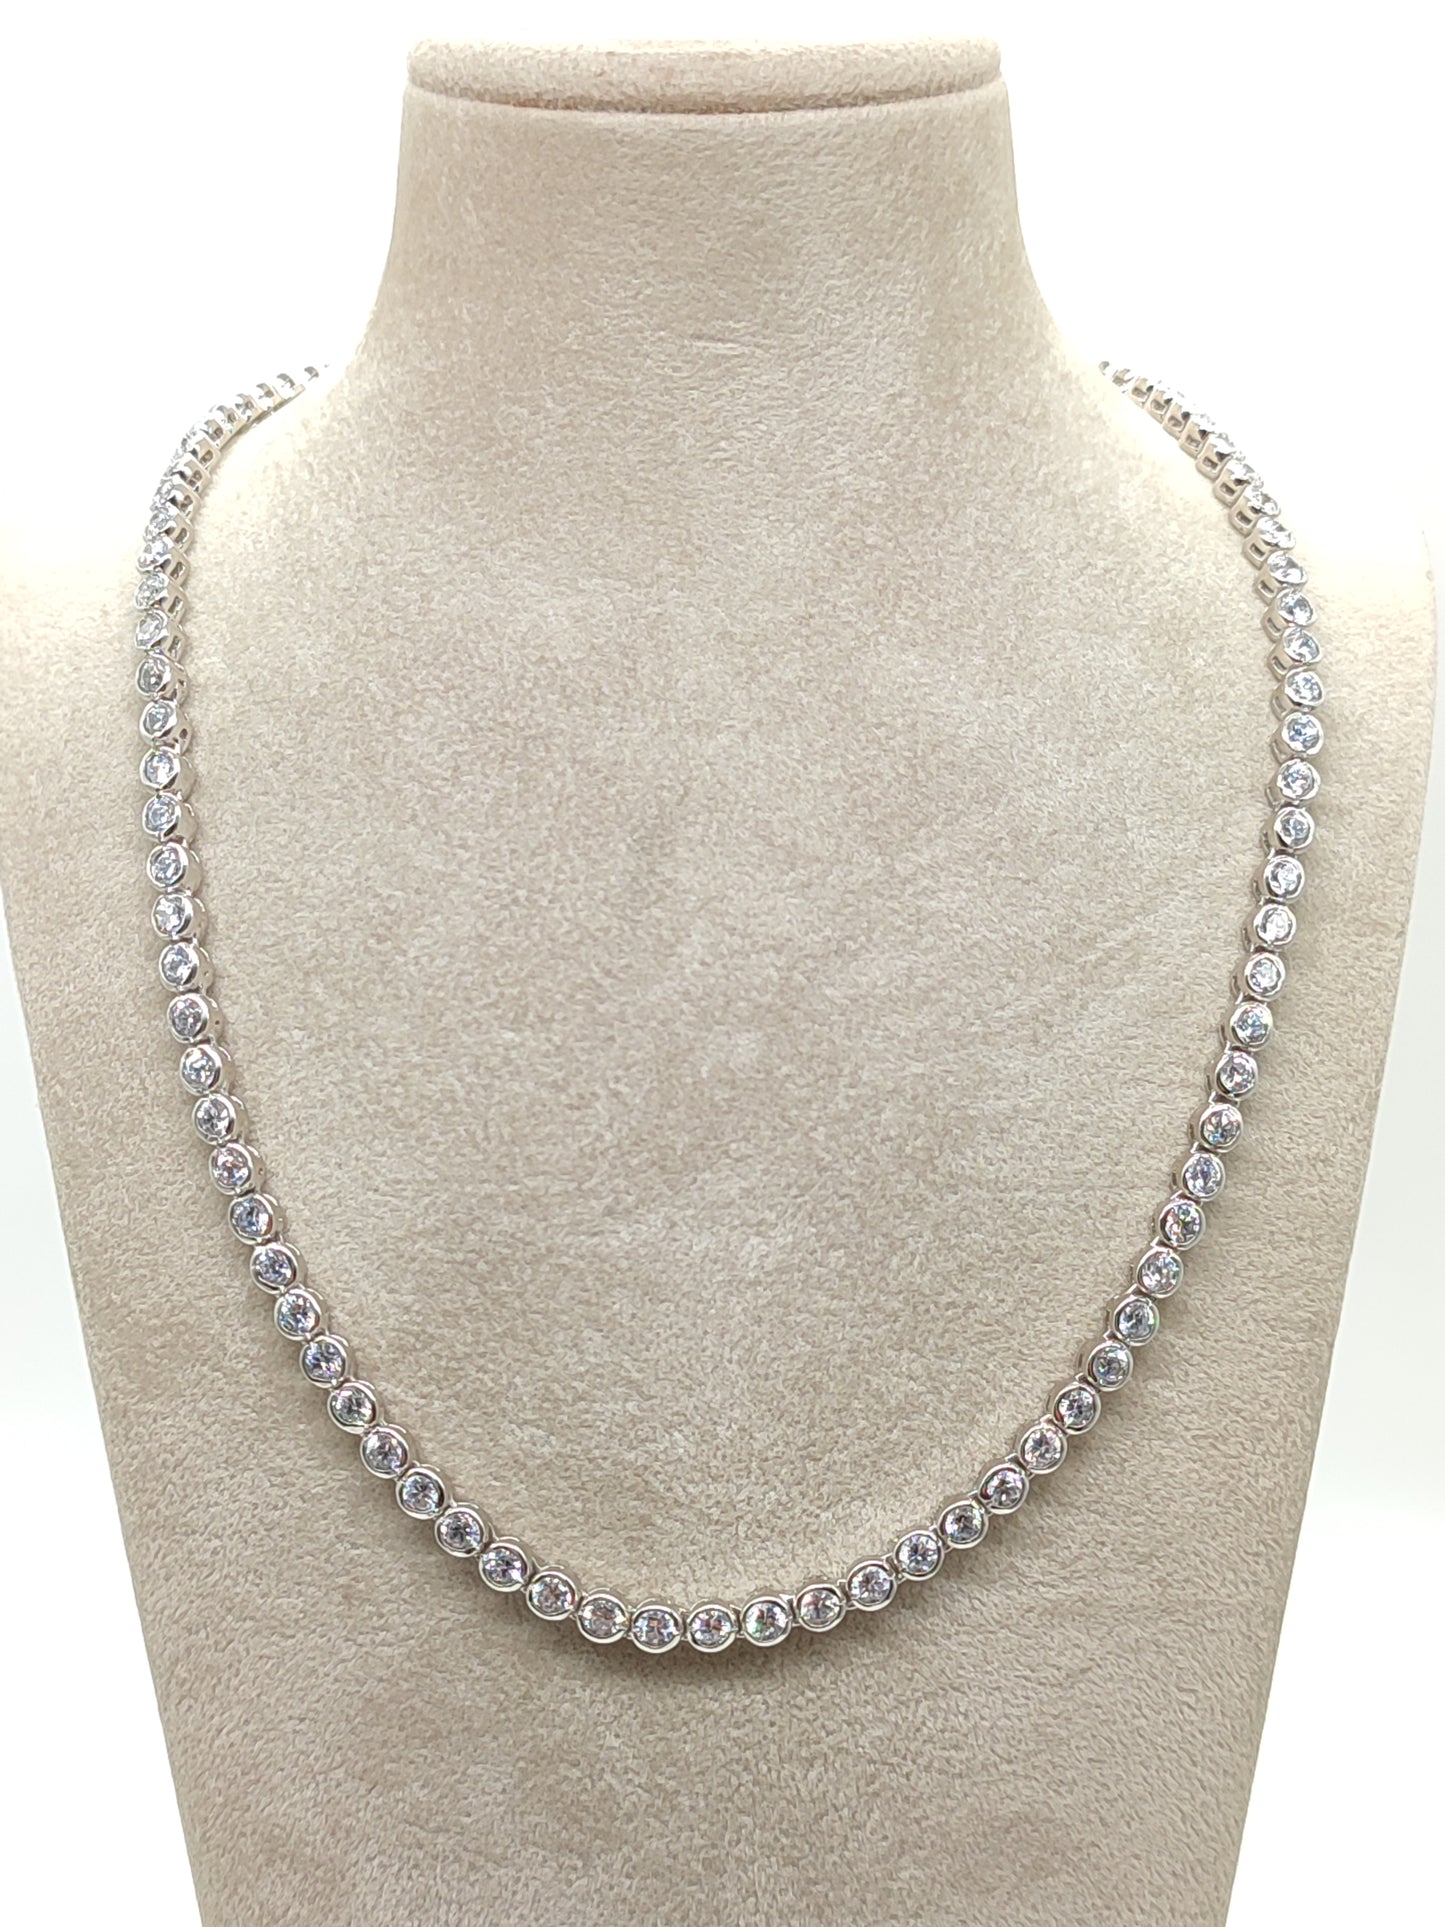 Silver tennis model necklace with zirconia